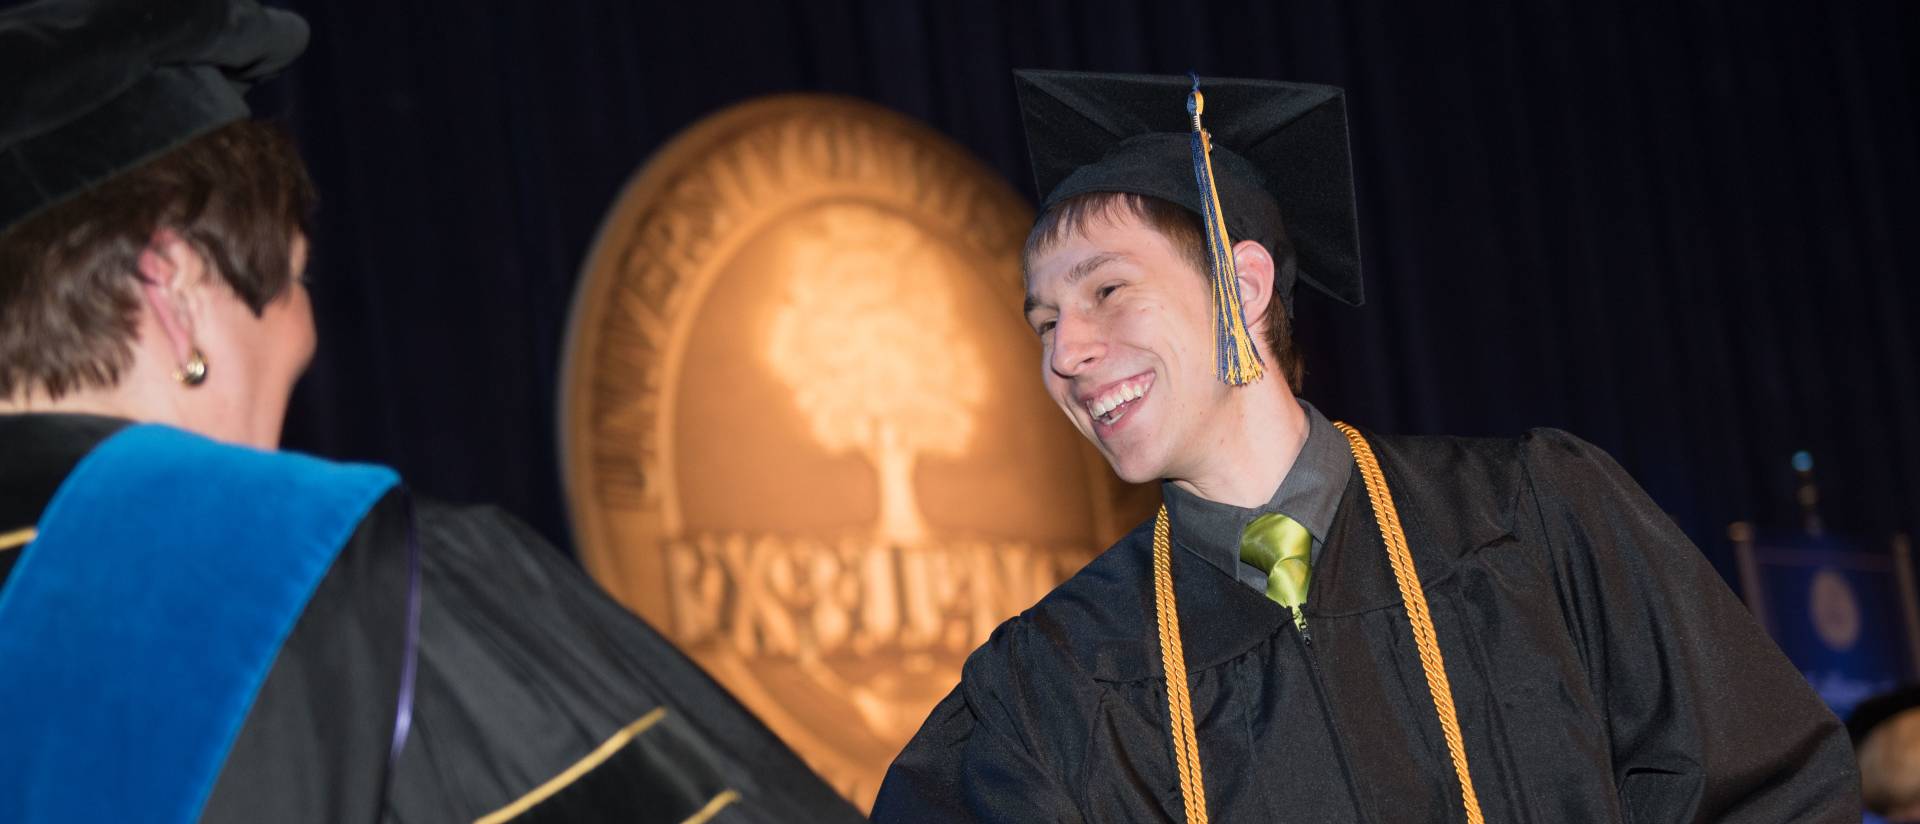 Grad receiving diploma